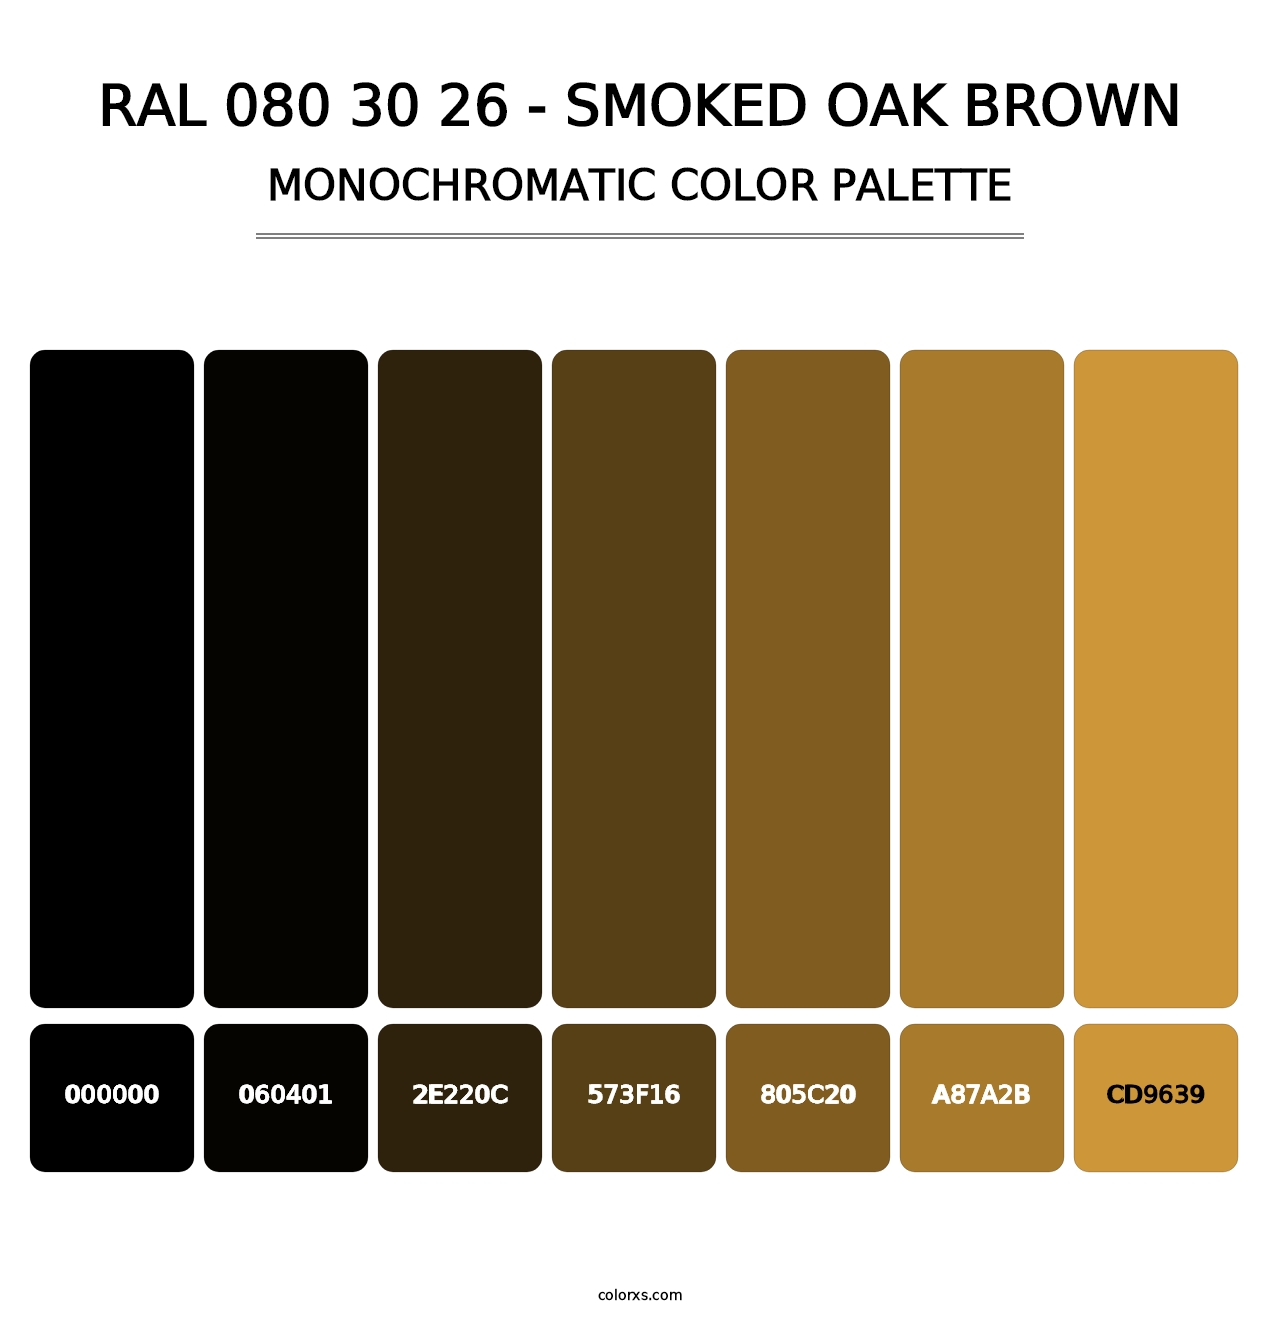 RAL 080 30 26 - Smoked Oak Brown - Monochromatic Color Palette